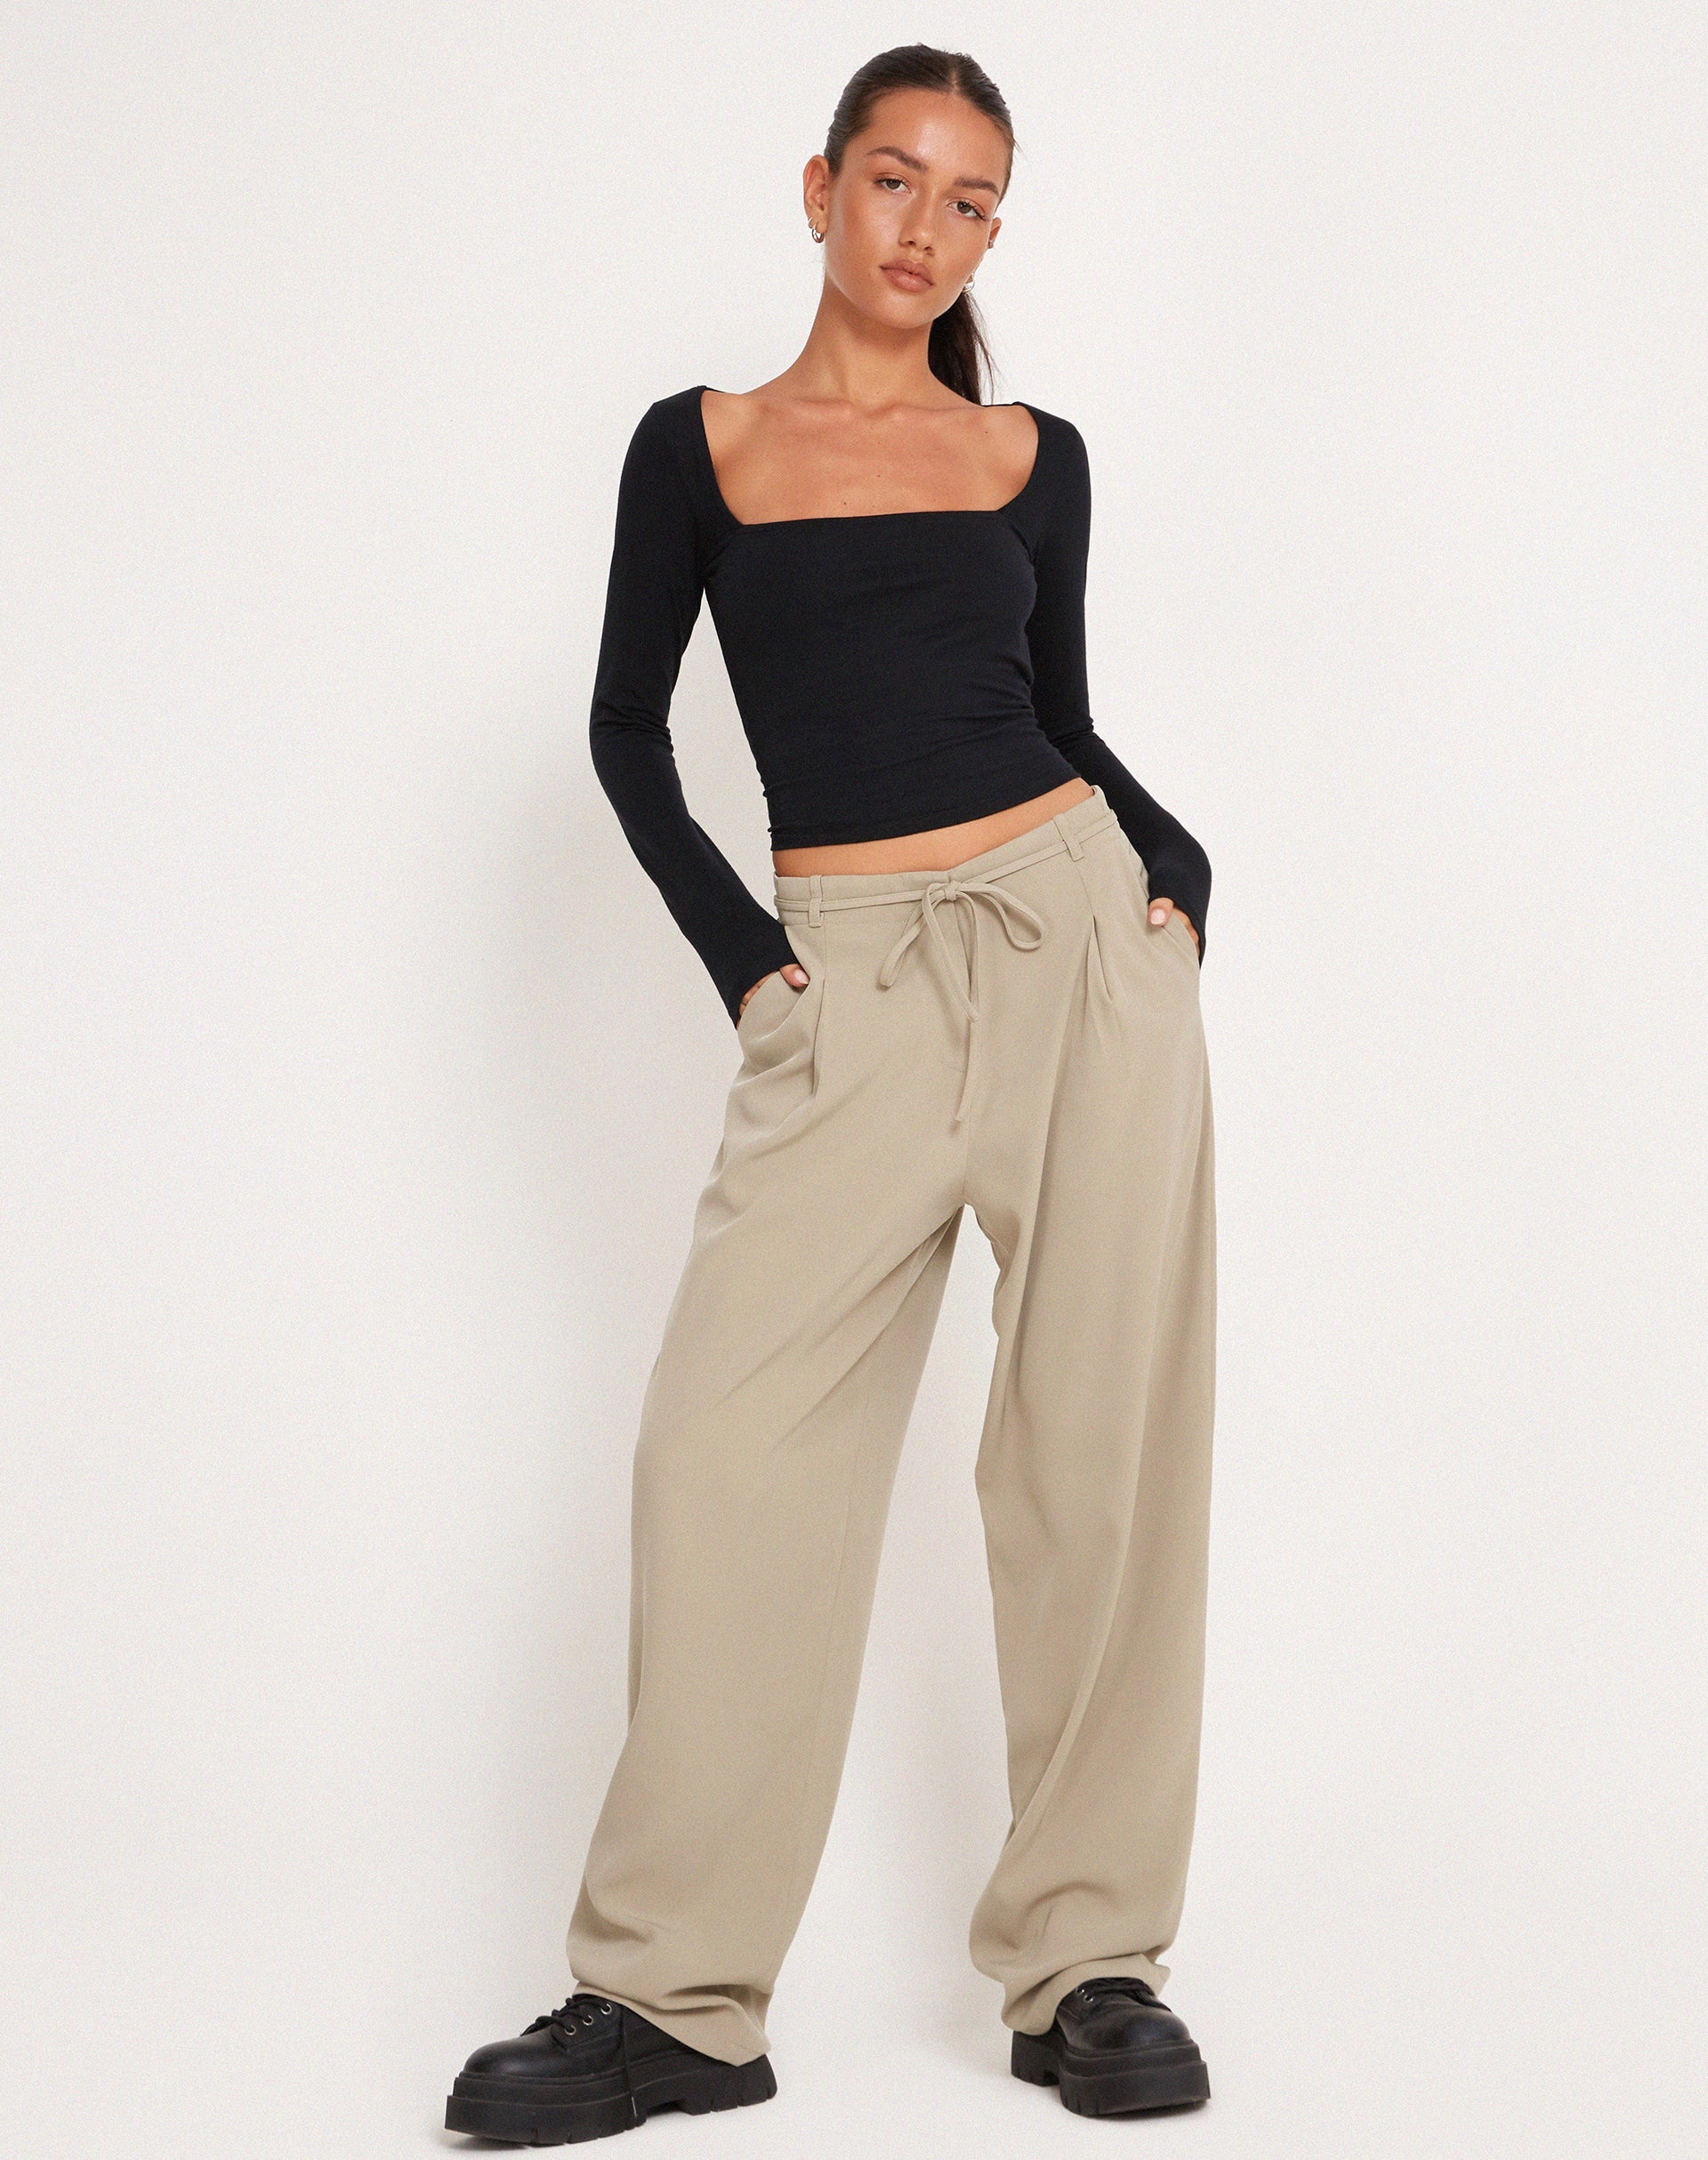 Honey Women Beige Trousers - Selling Fast at Pantaloons.com